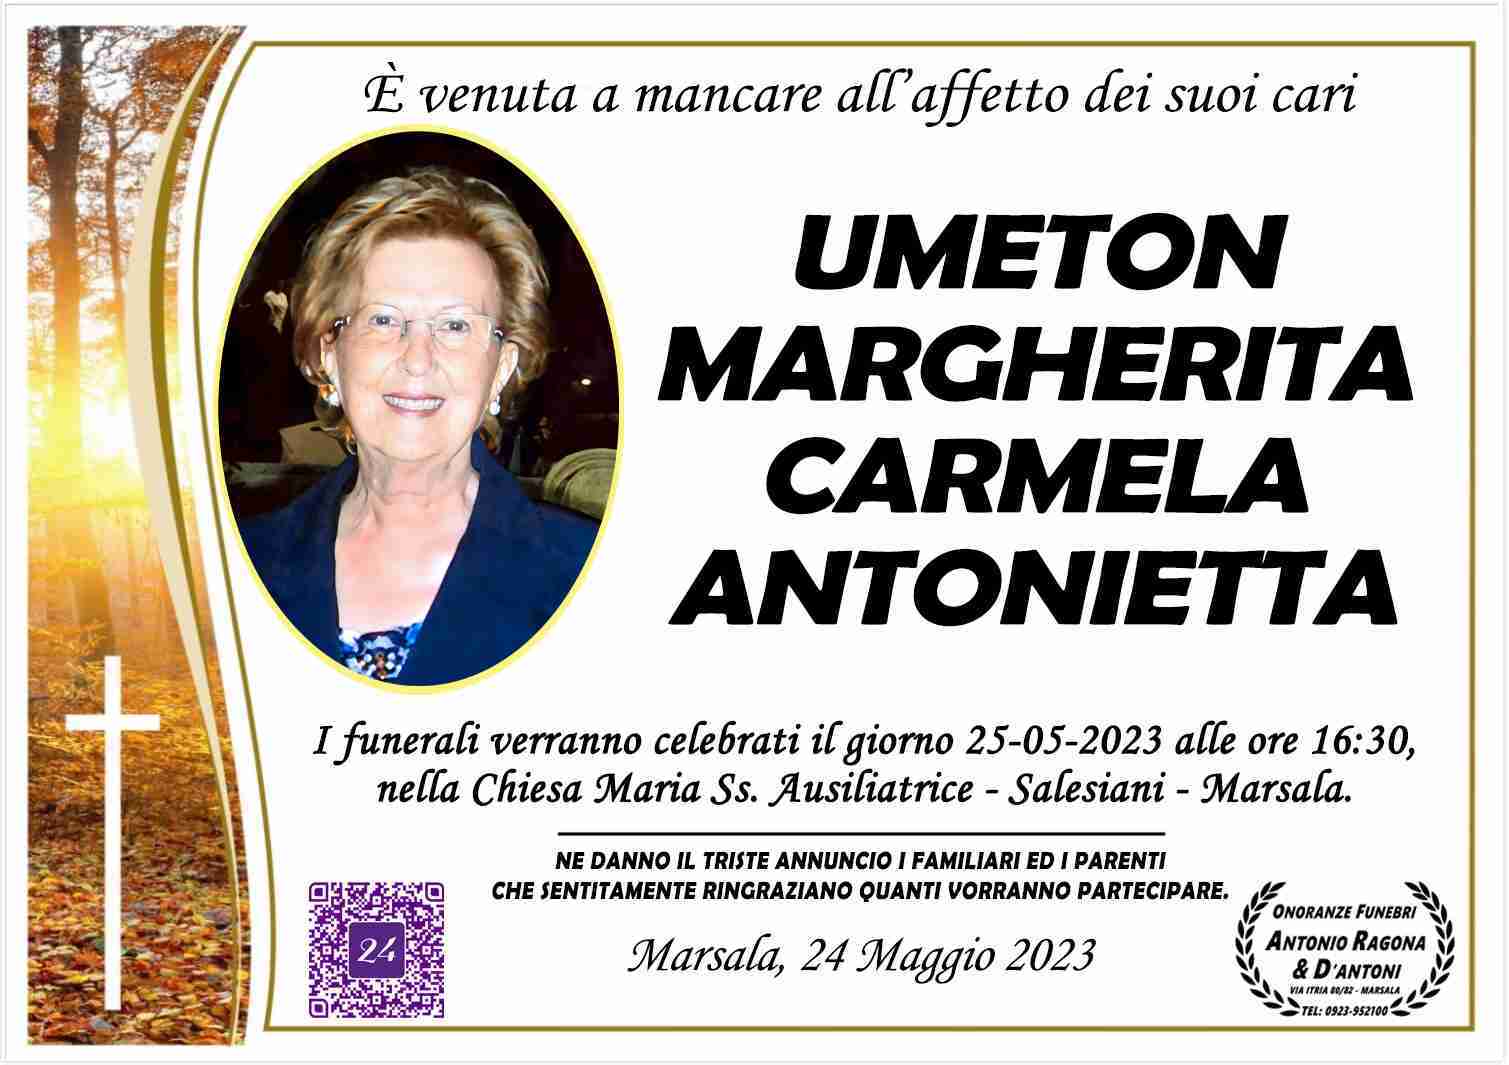 Margherita Carmela Antonietta Umeton